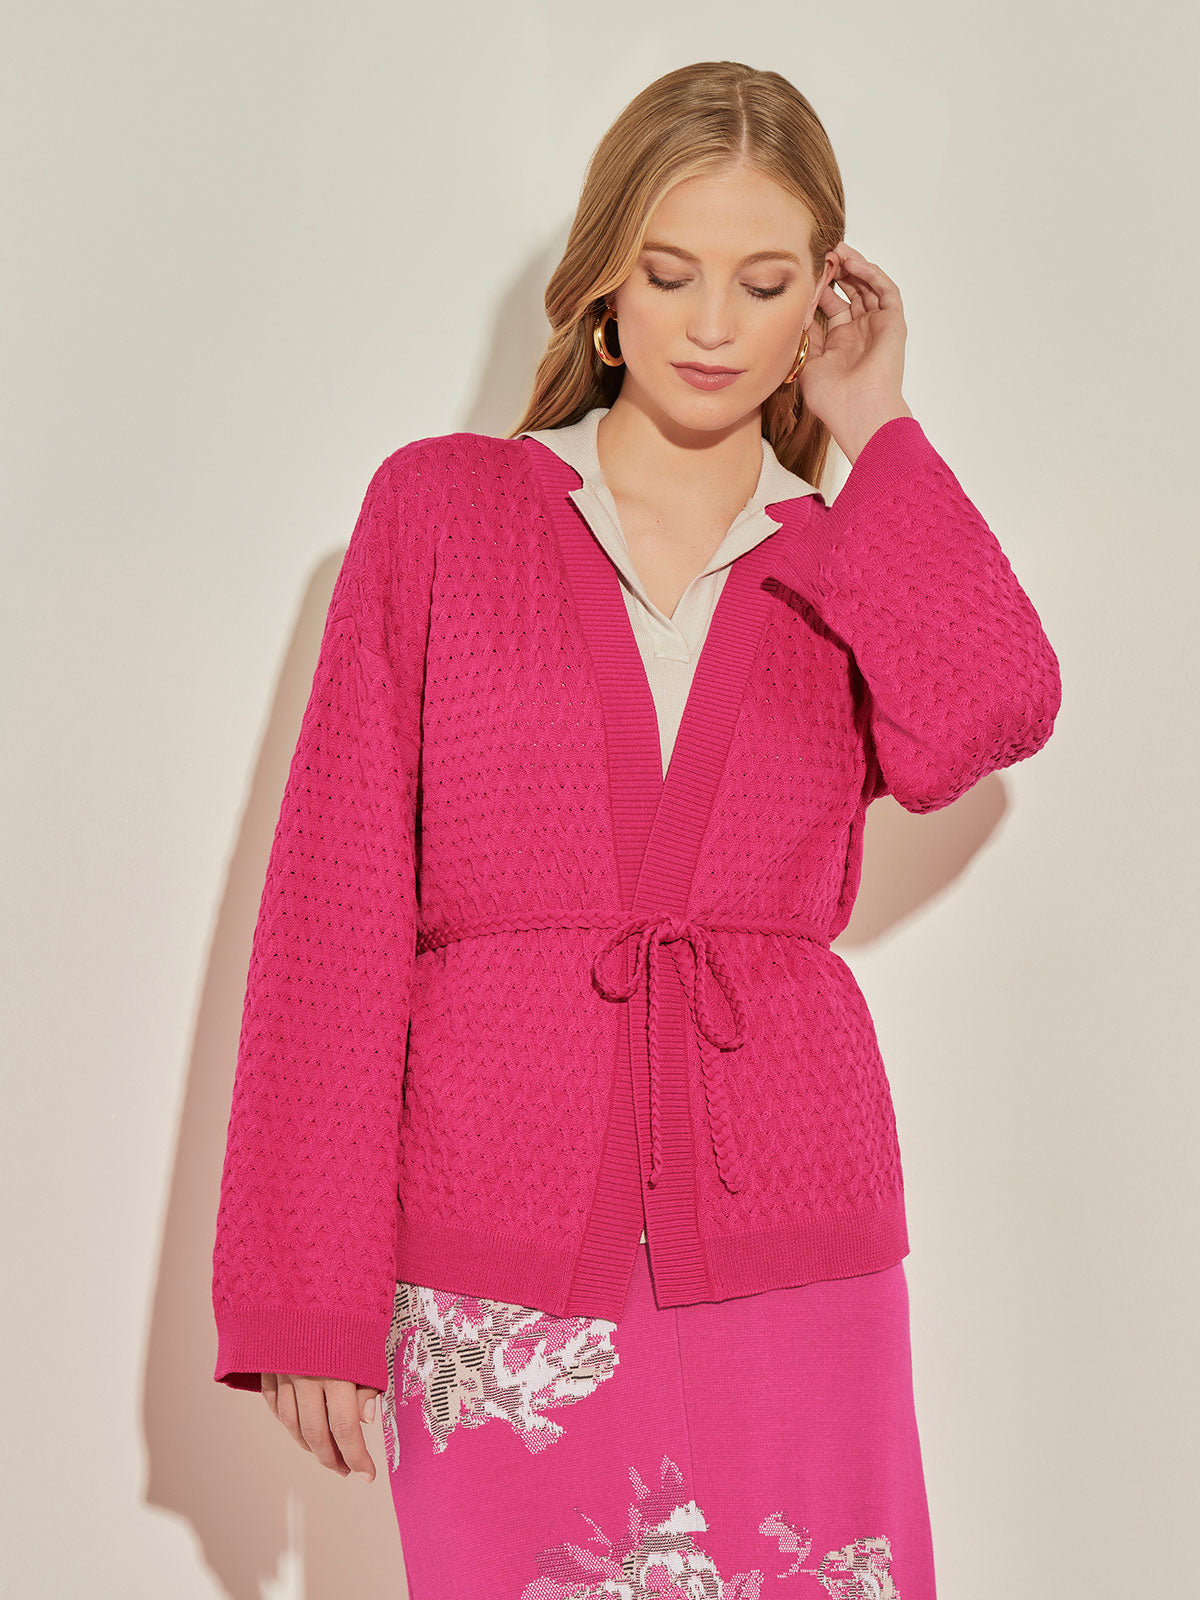 Belted Cardigan - Pink Knit Cardigan | Misook